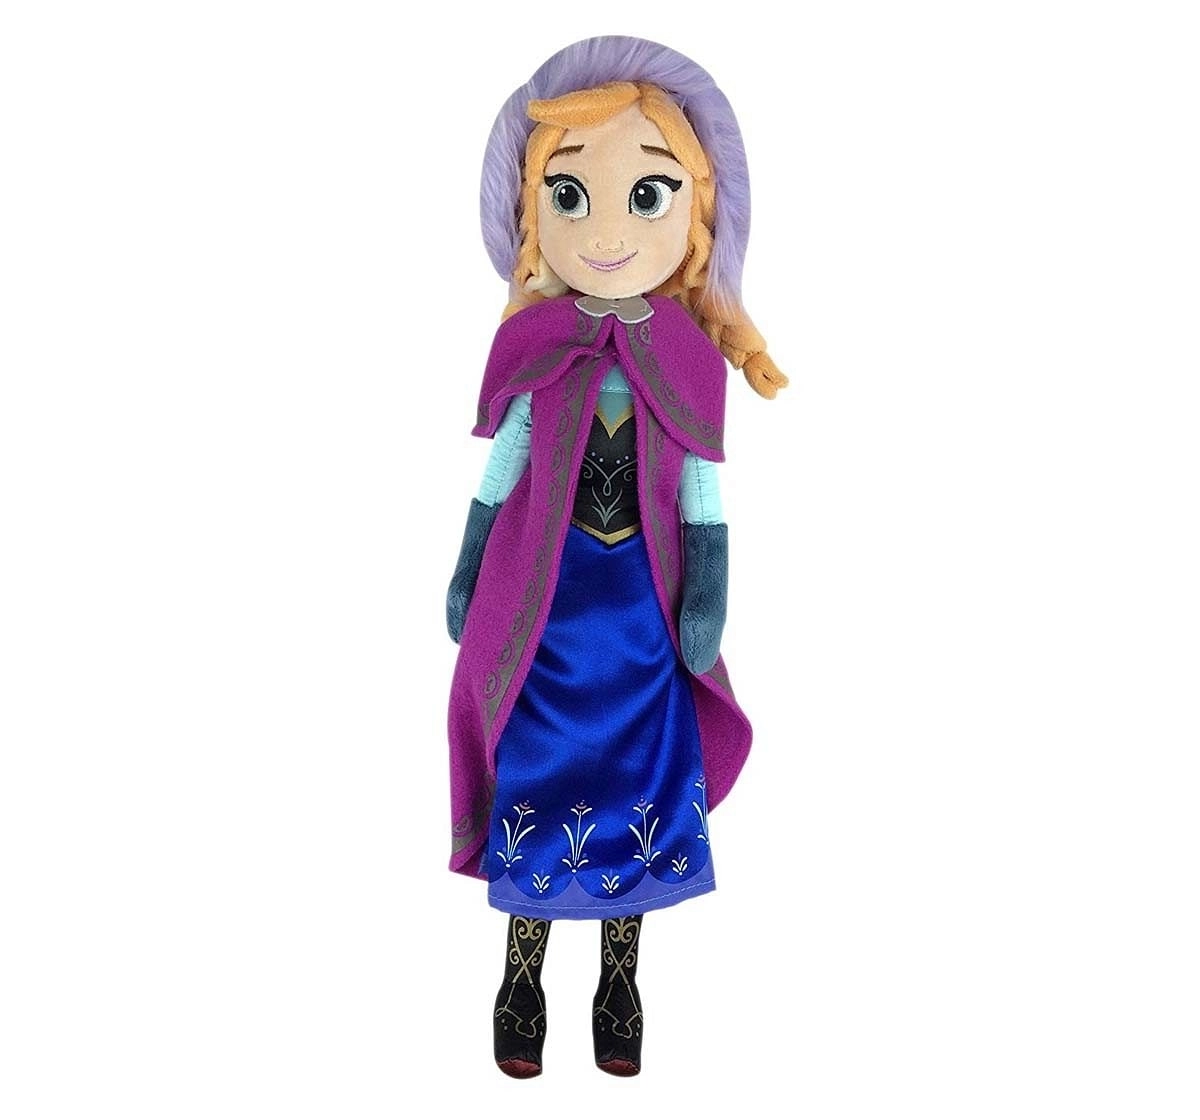 Disney Frozen Anna Plush Doll, Multi Color, for Kids age 0M+ 22.9 Cm 